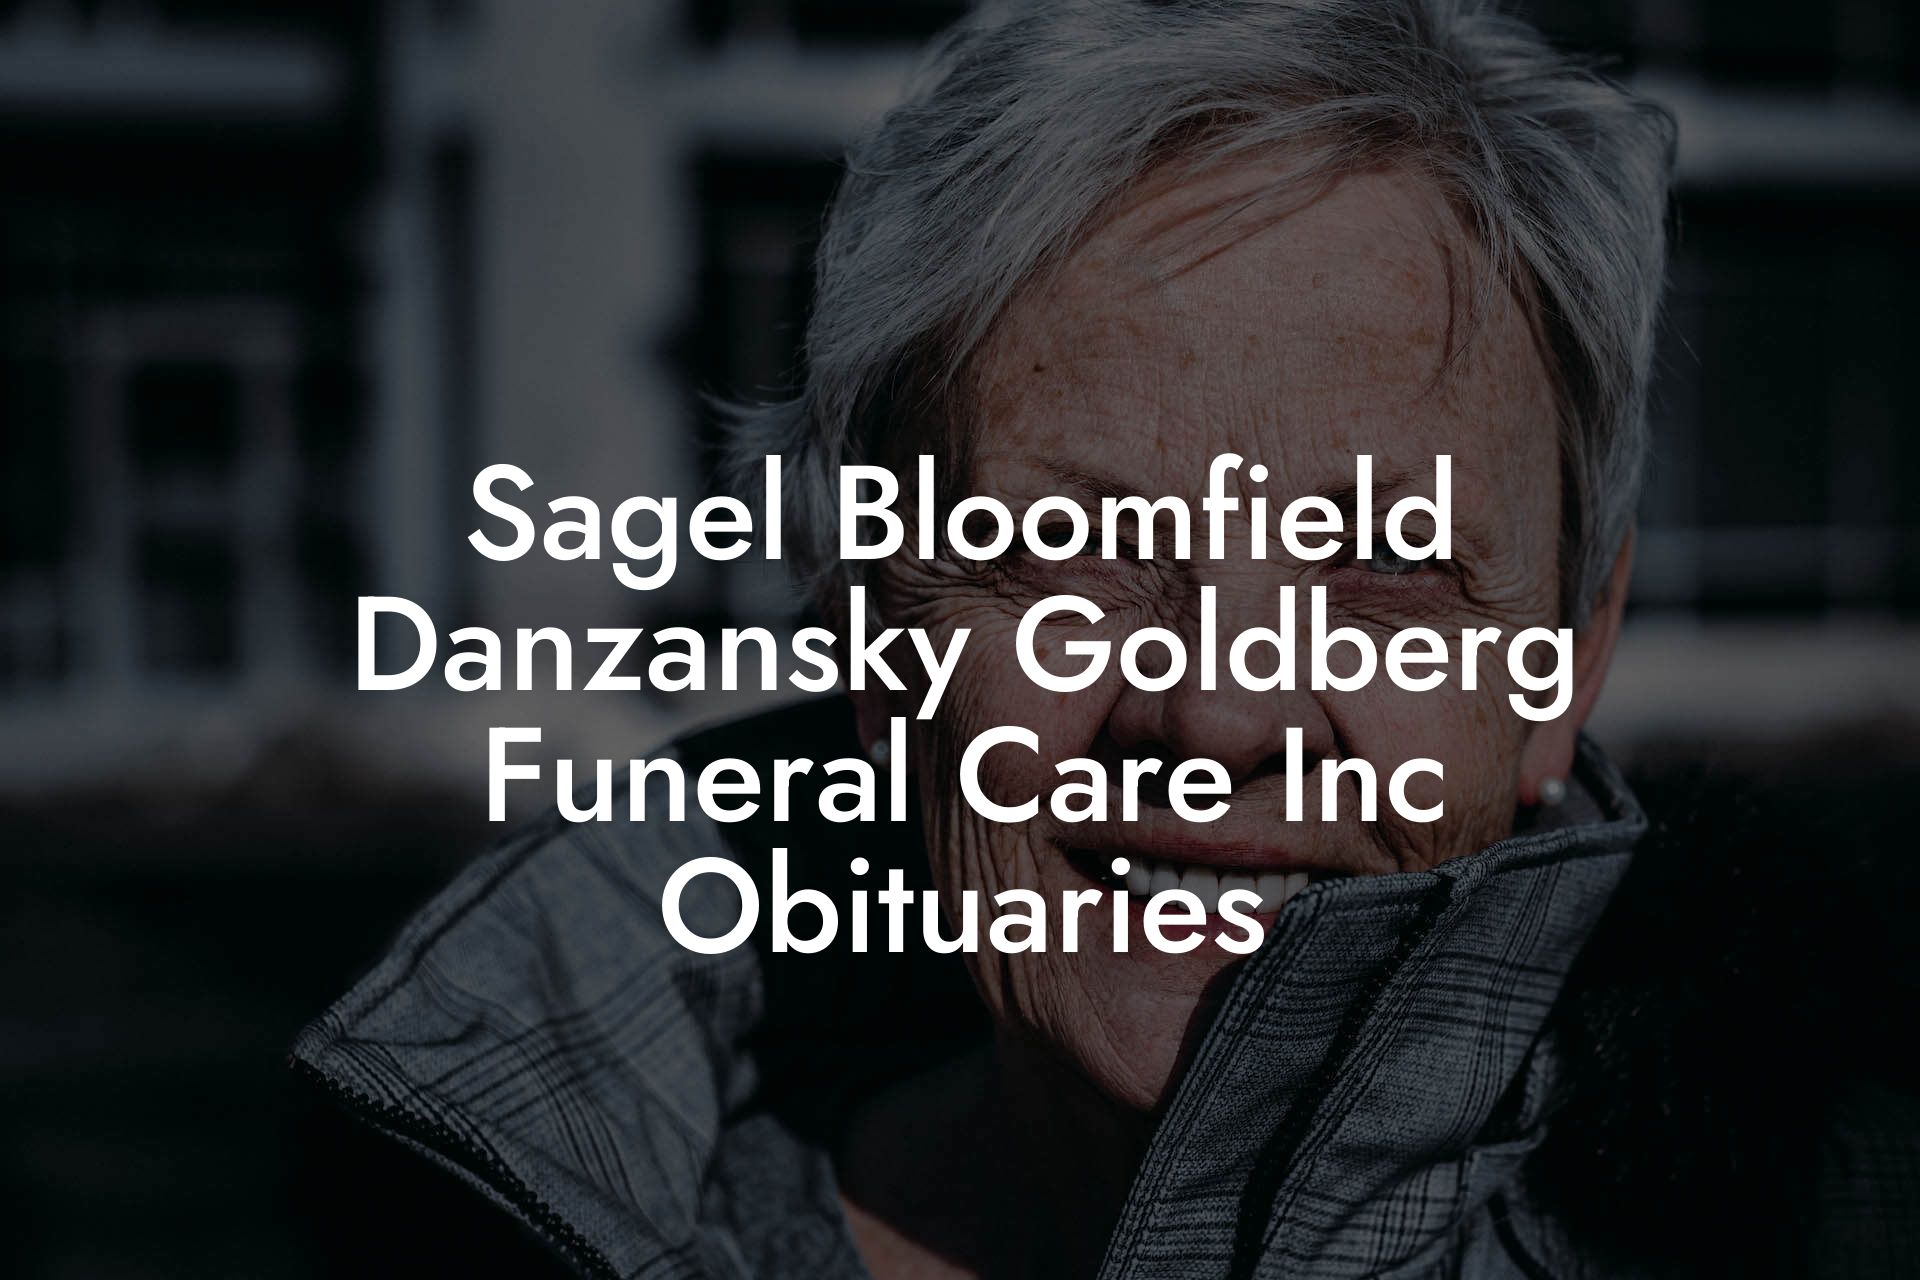 Sagel Bloomfield Danzansky Goldberg Funeral Care Inc Obituaries